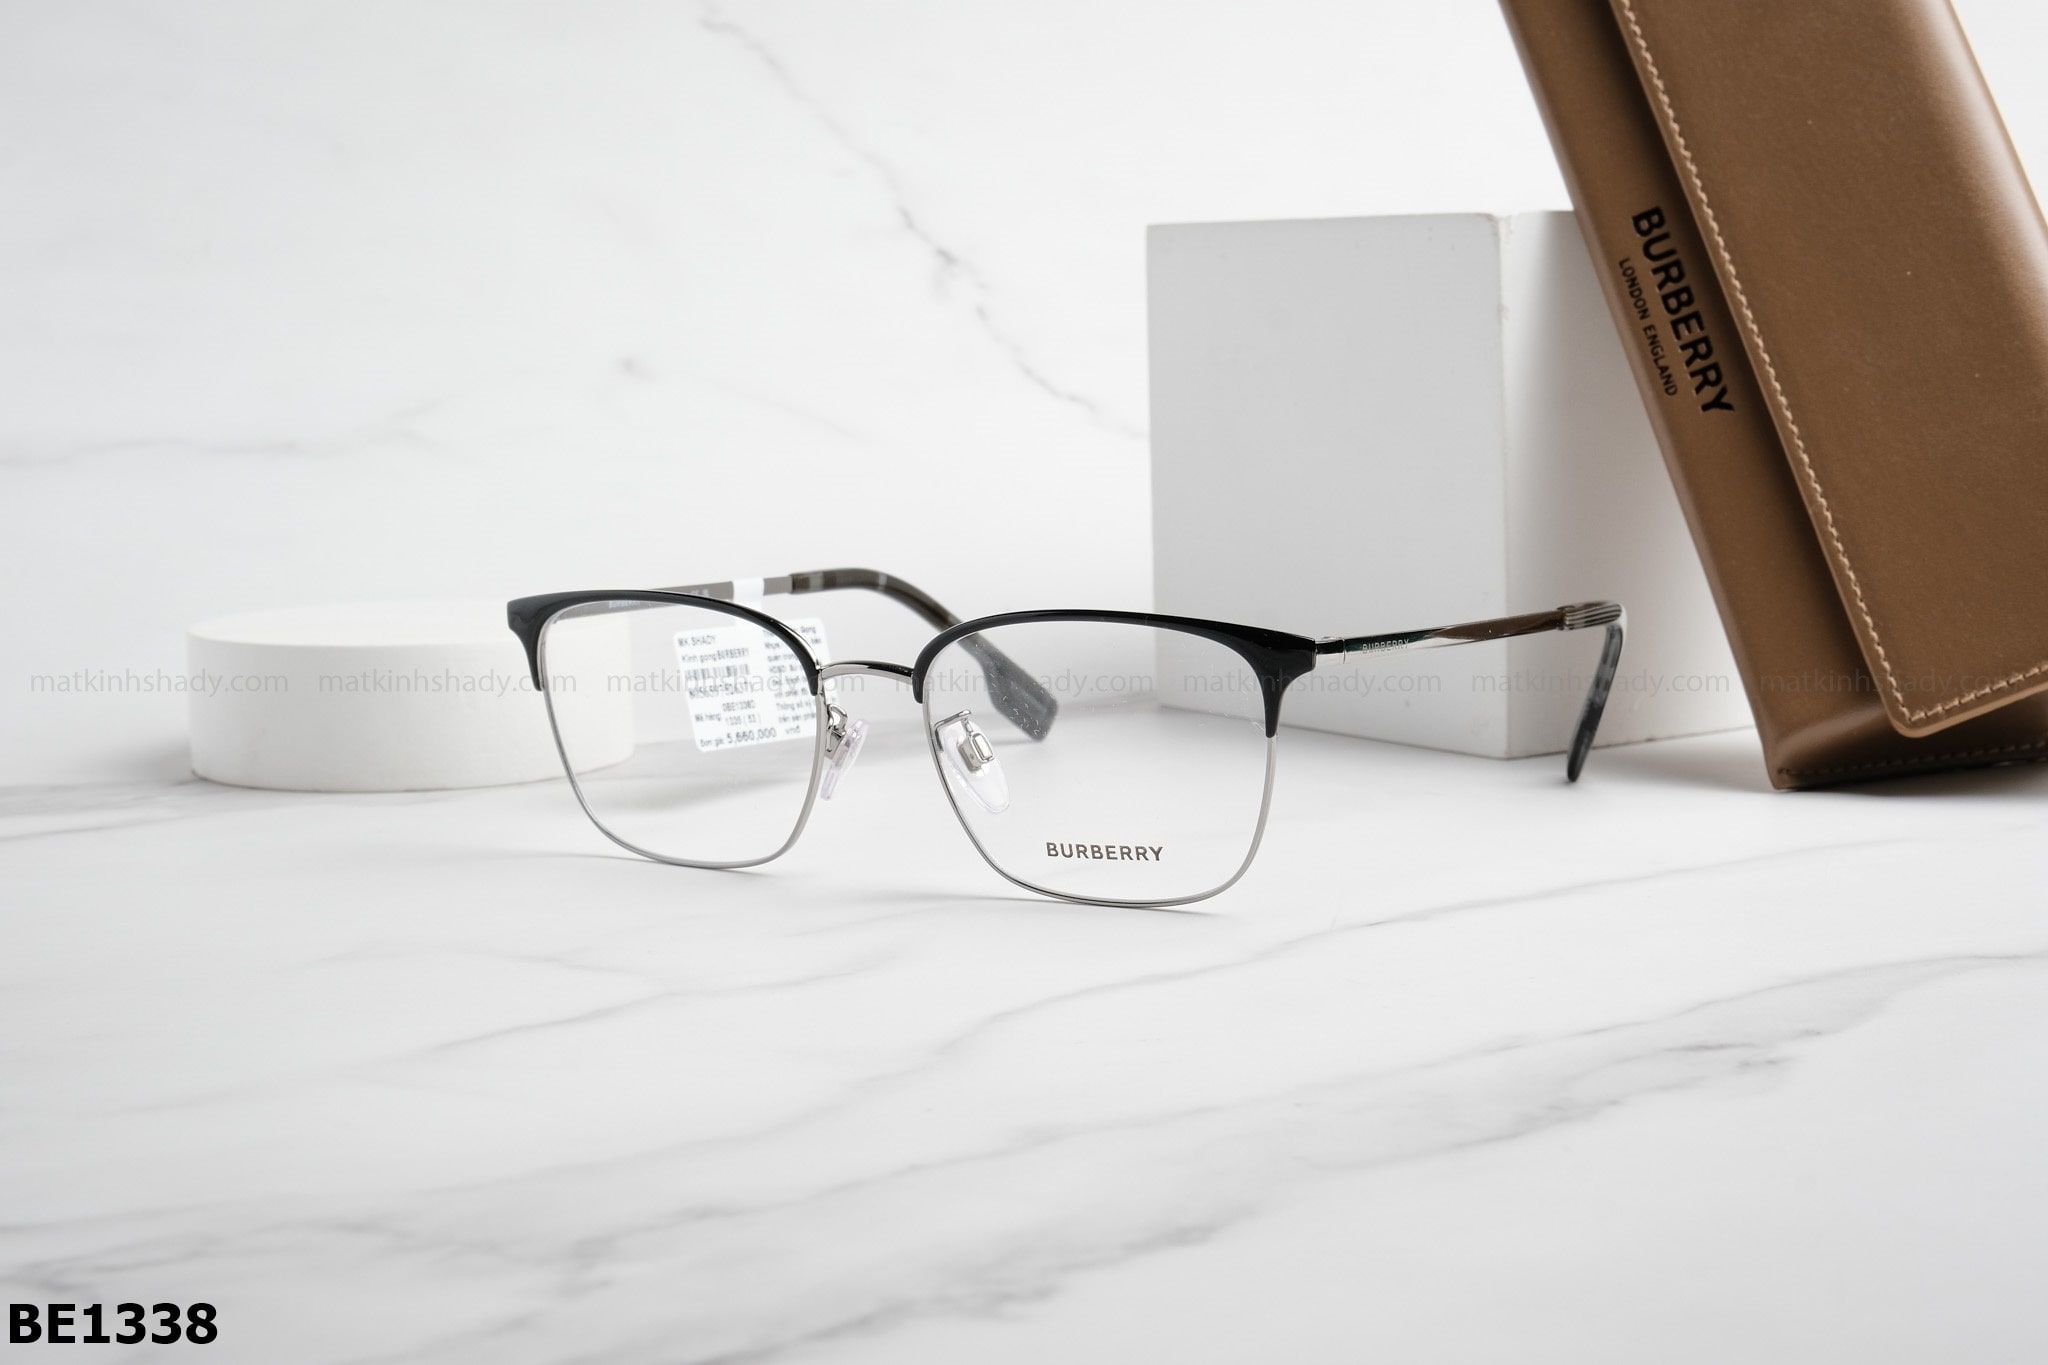  Burberry Eyewear - Glasses - BE1338 